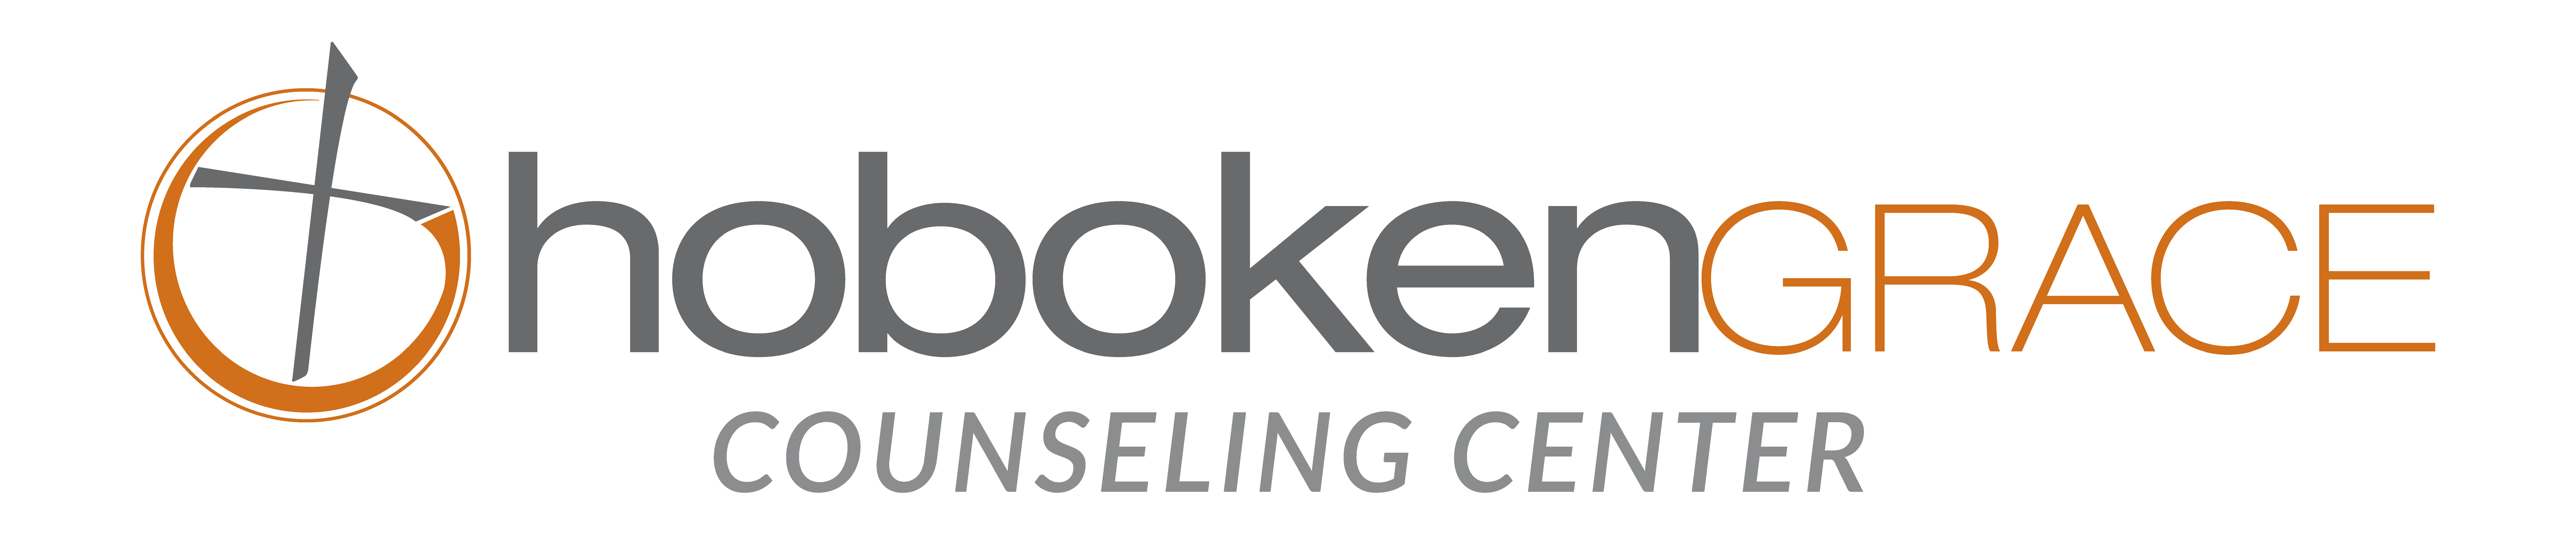 Counseling center logo